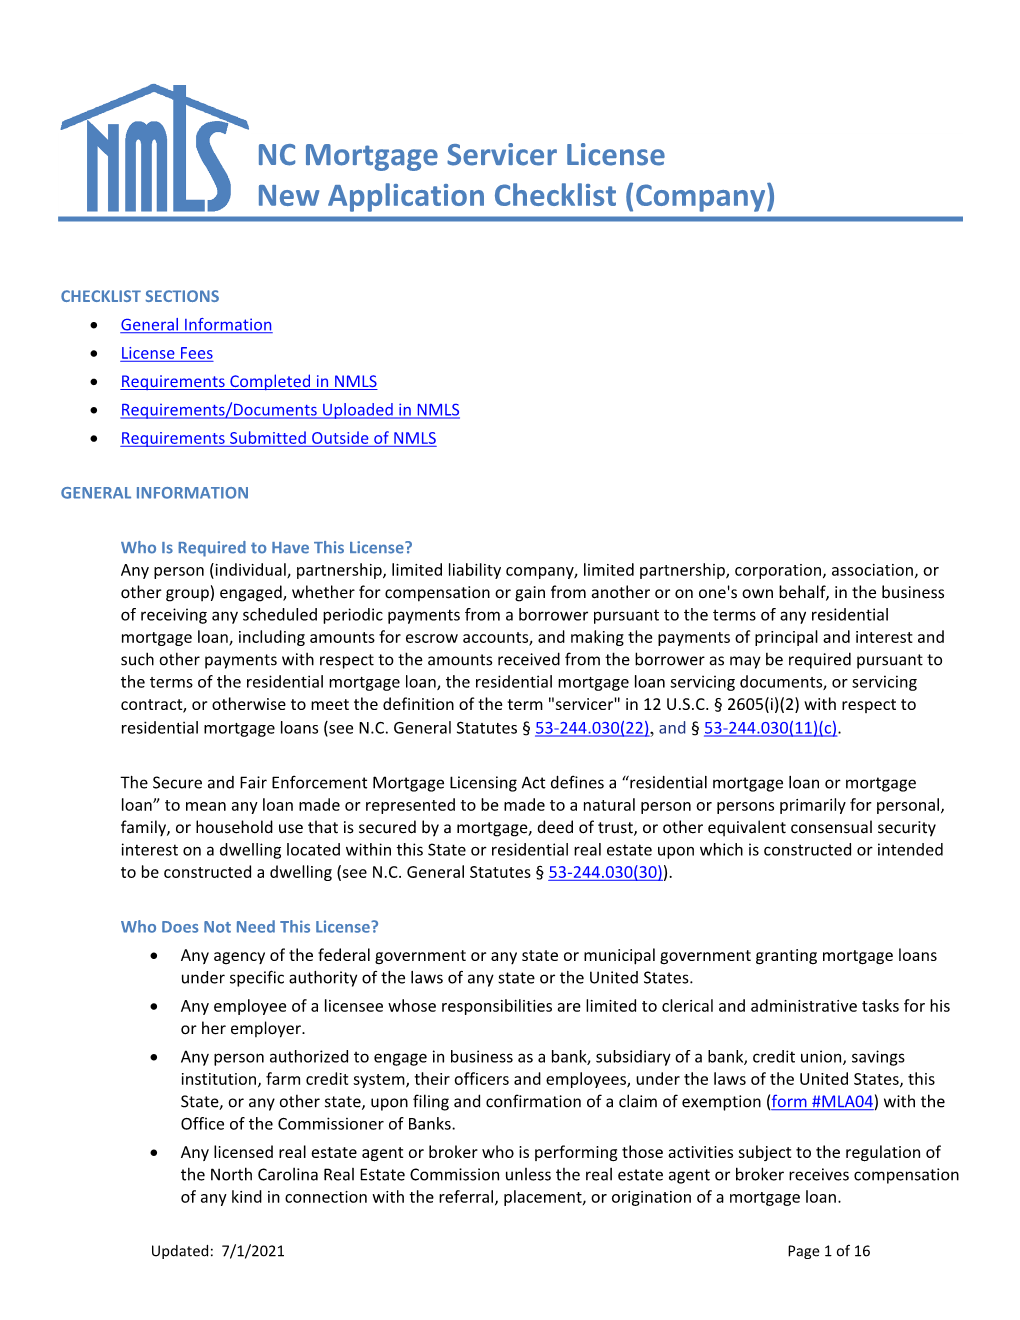 NC Mortgage Servicer License New Application Checklist (Company)